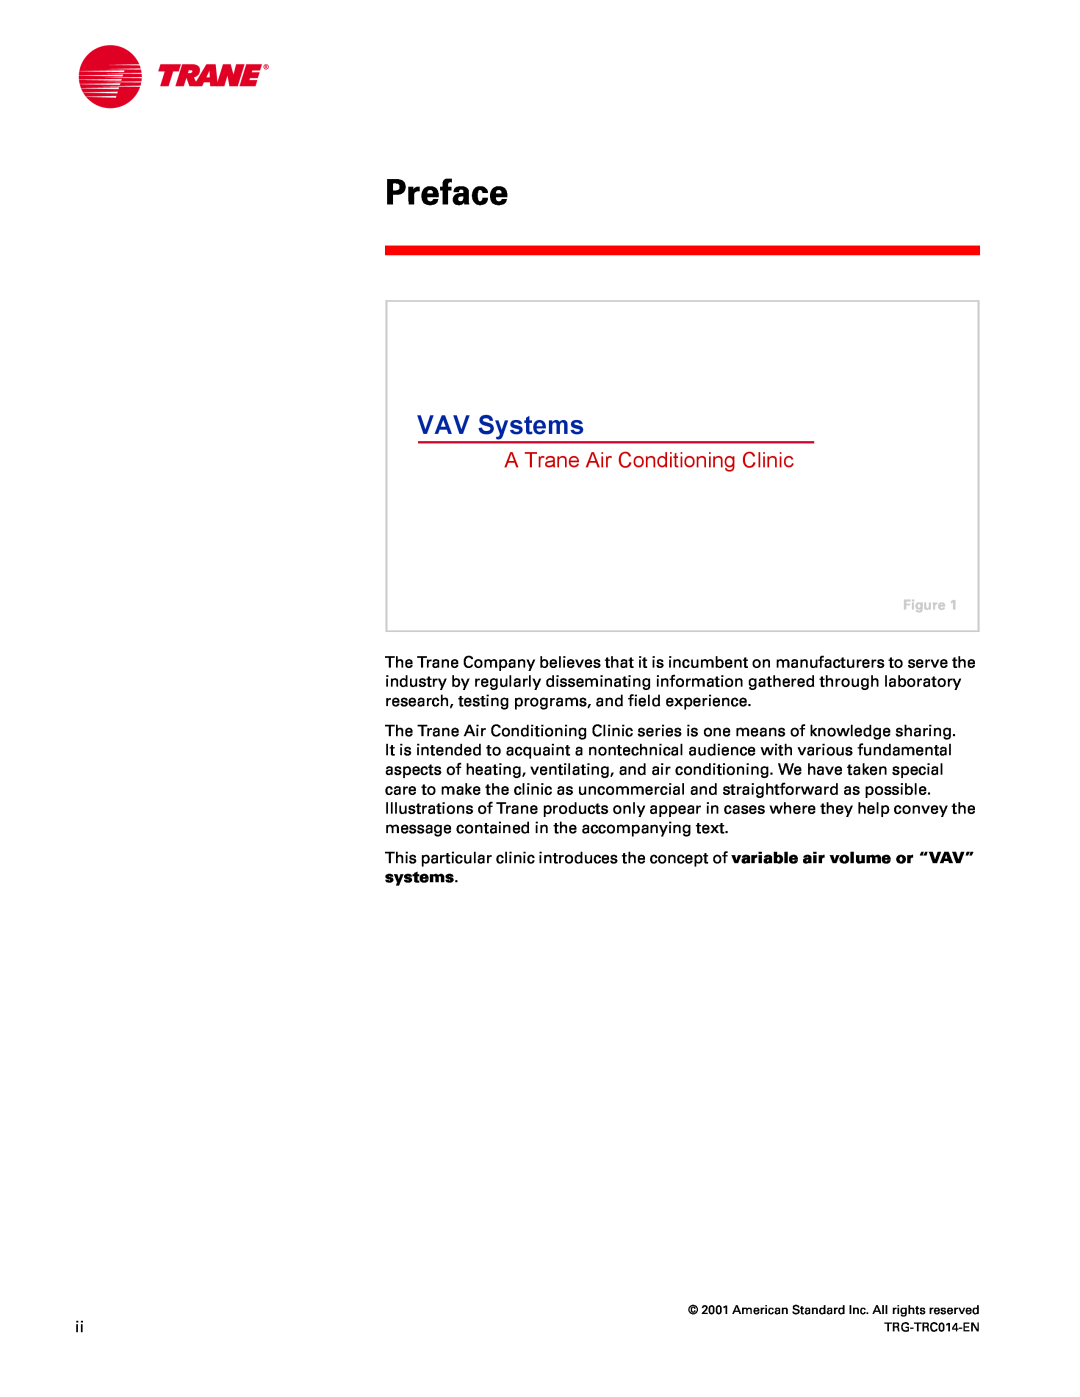 Trane TRG-TRC014-EN manual Preface, VAV Systems, A Trane Air Conditioning Clinic 